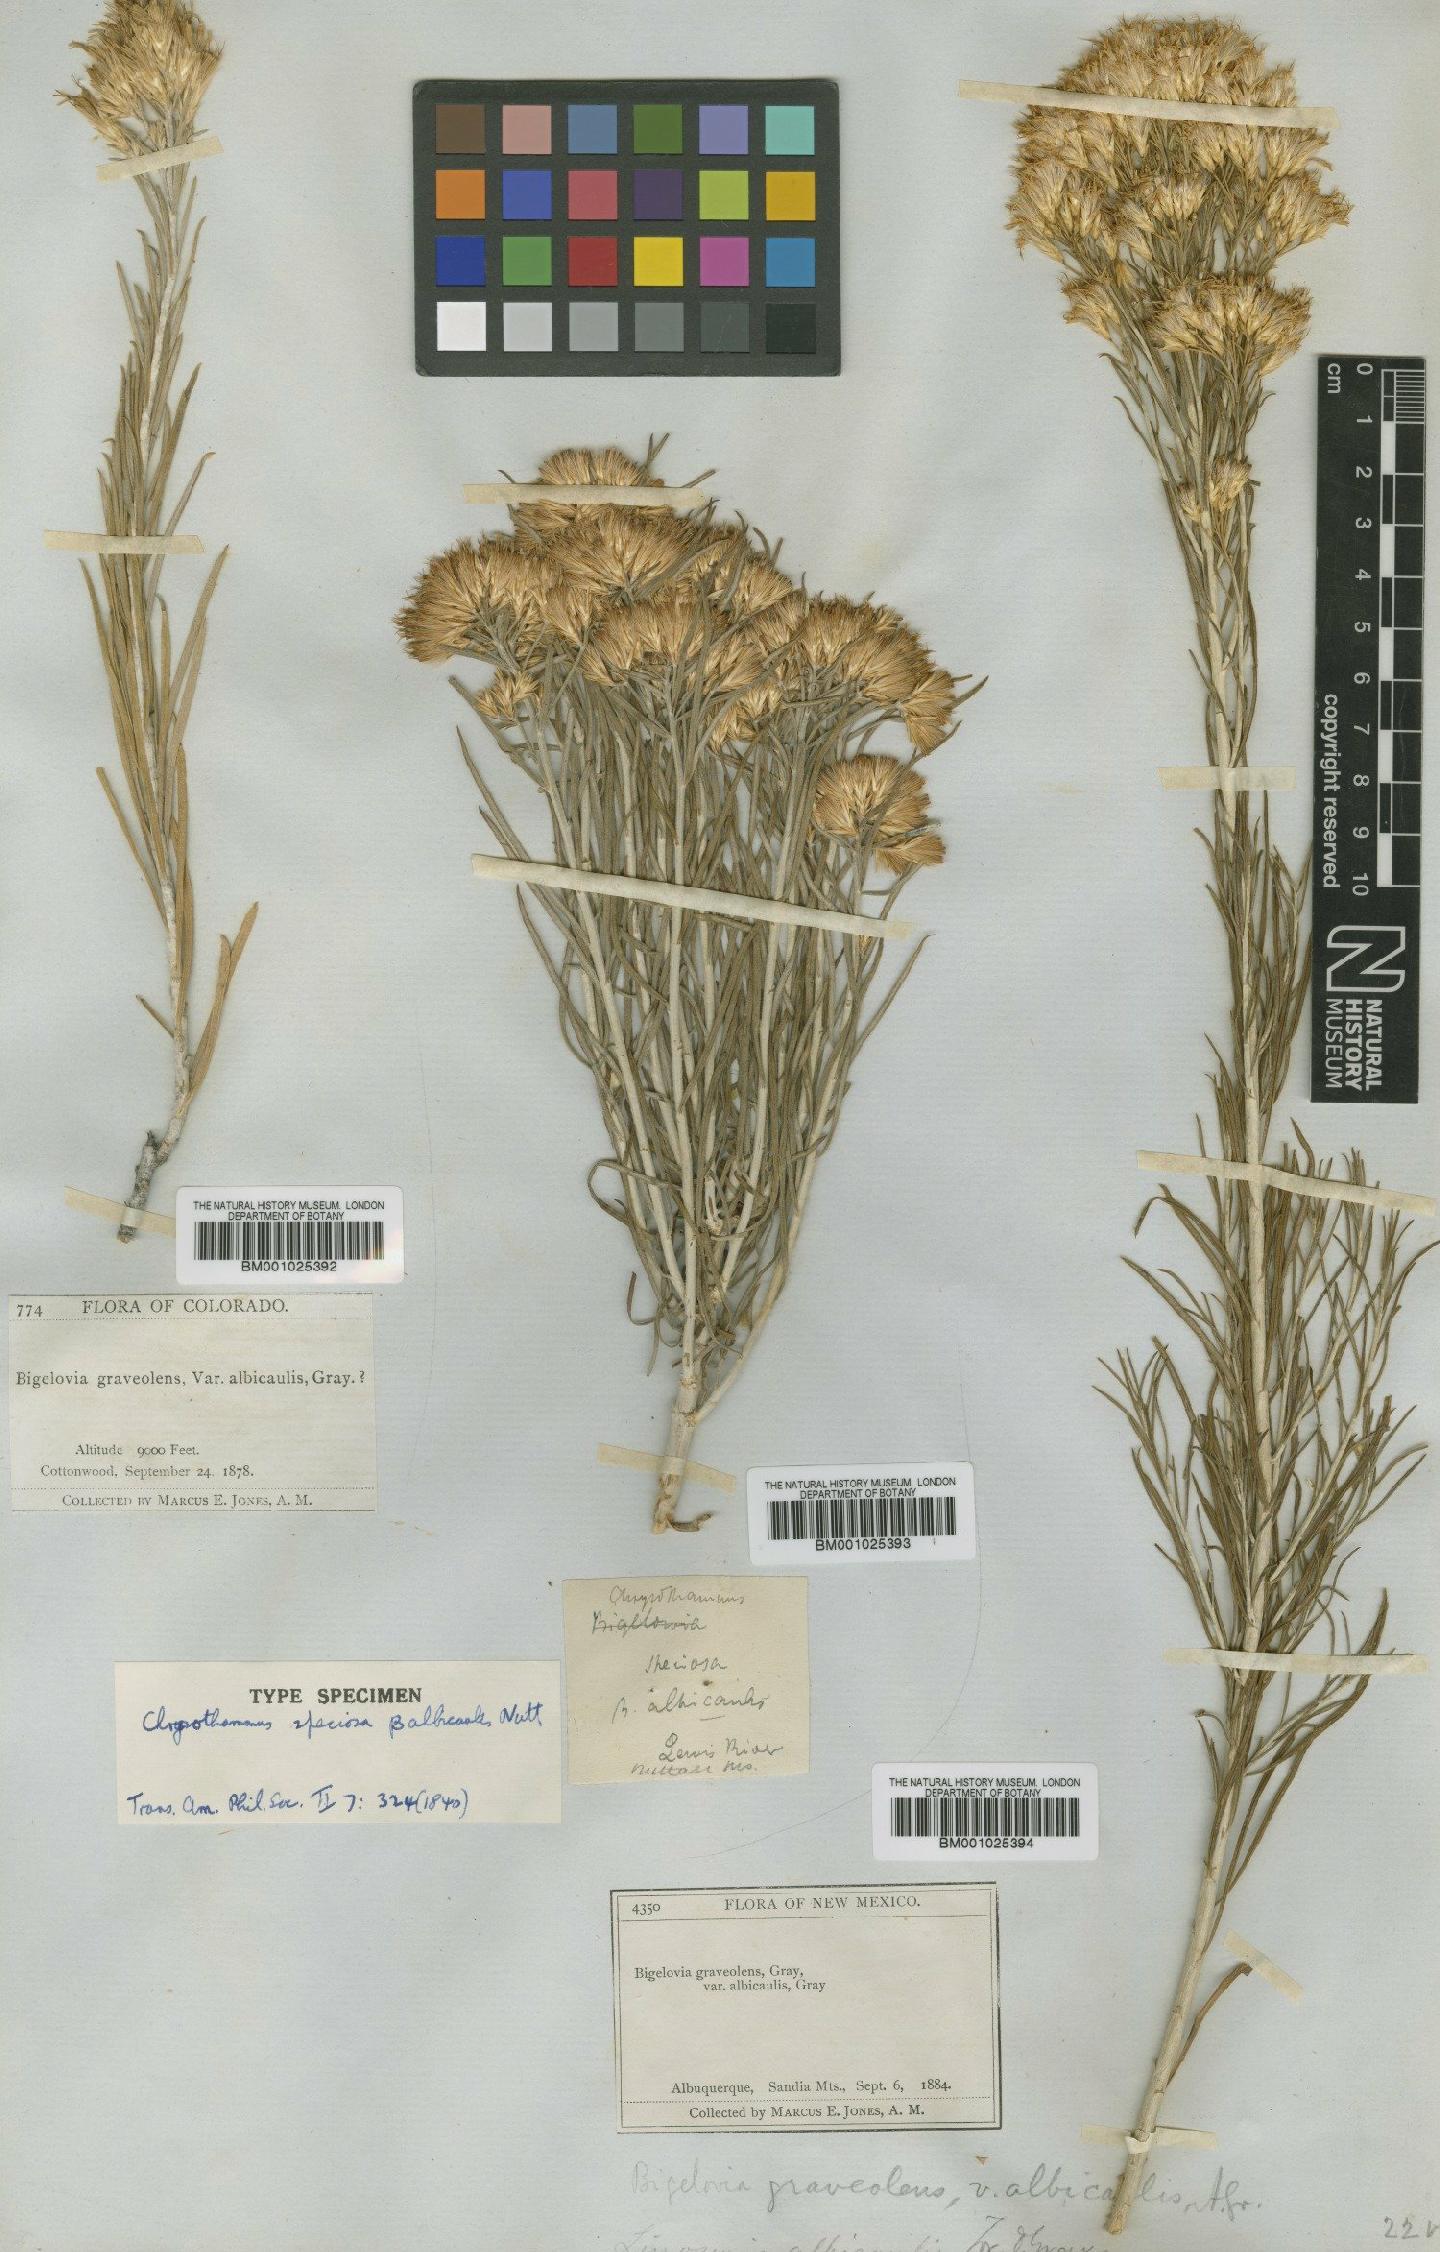 To NHMUK collection (Chrysothamnus nauseosus subsp. albicaulis (Nutt.) H.M.Hall & Clem.; Type; NHMUK:ecatalogue:746554)